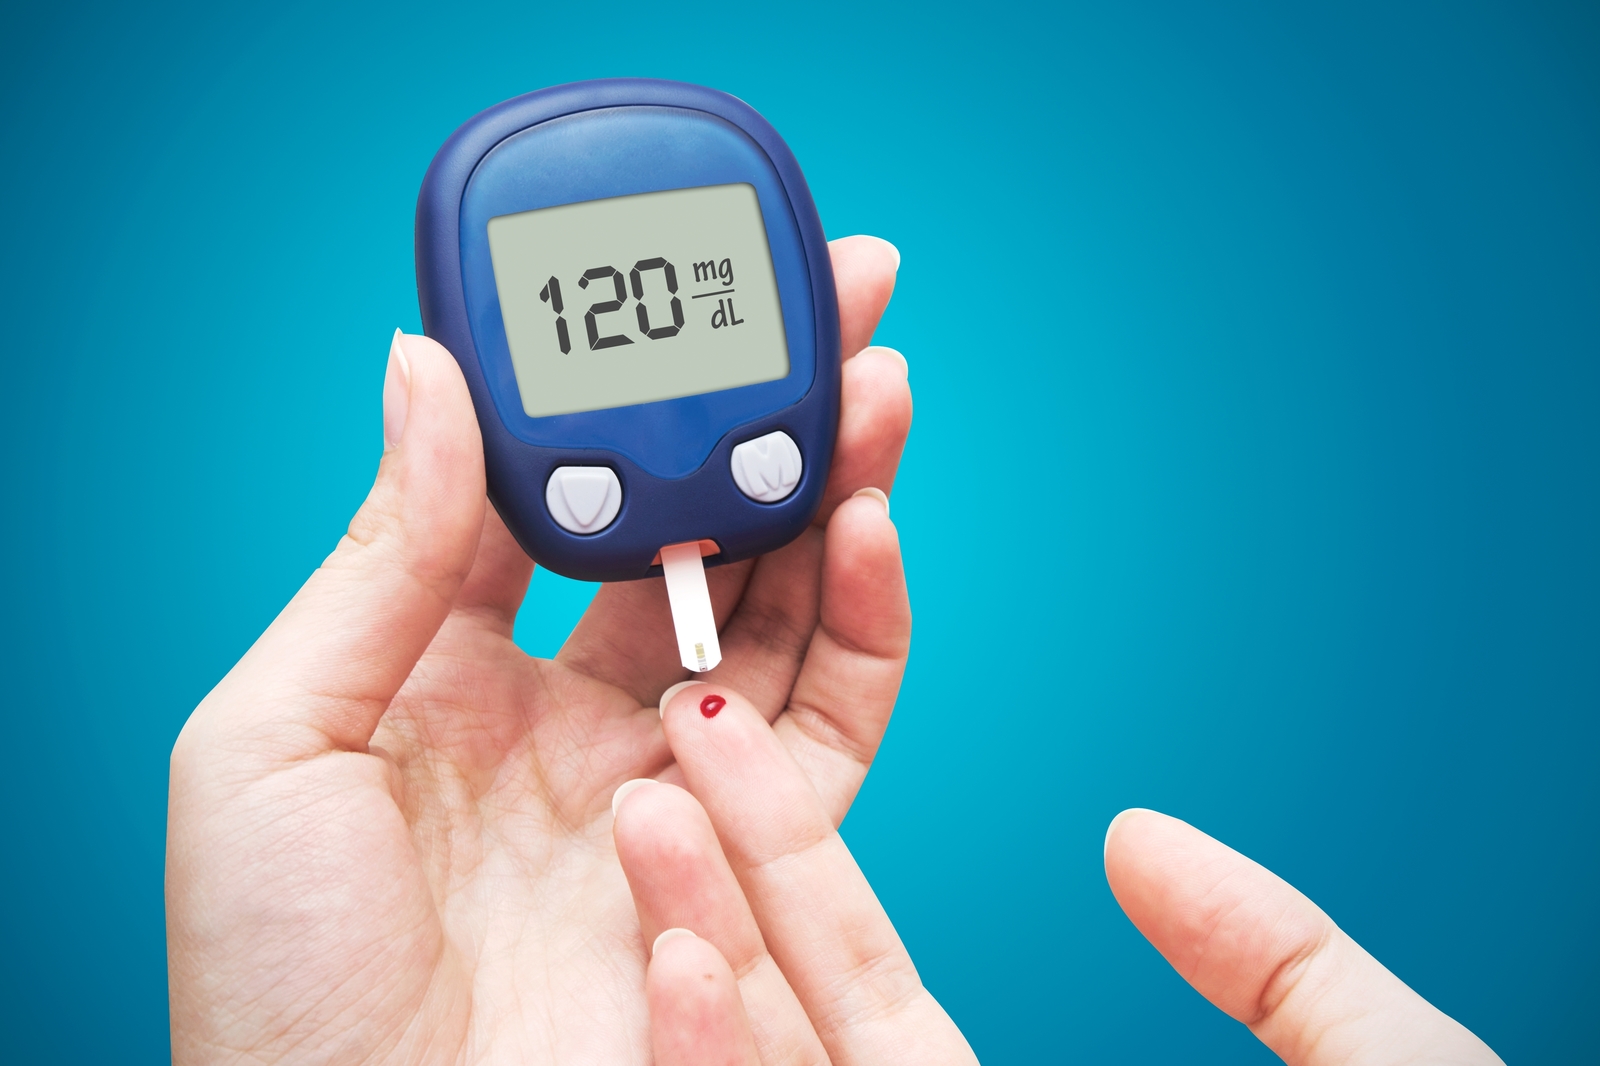 Does Dalia increase blood sugar levels?